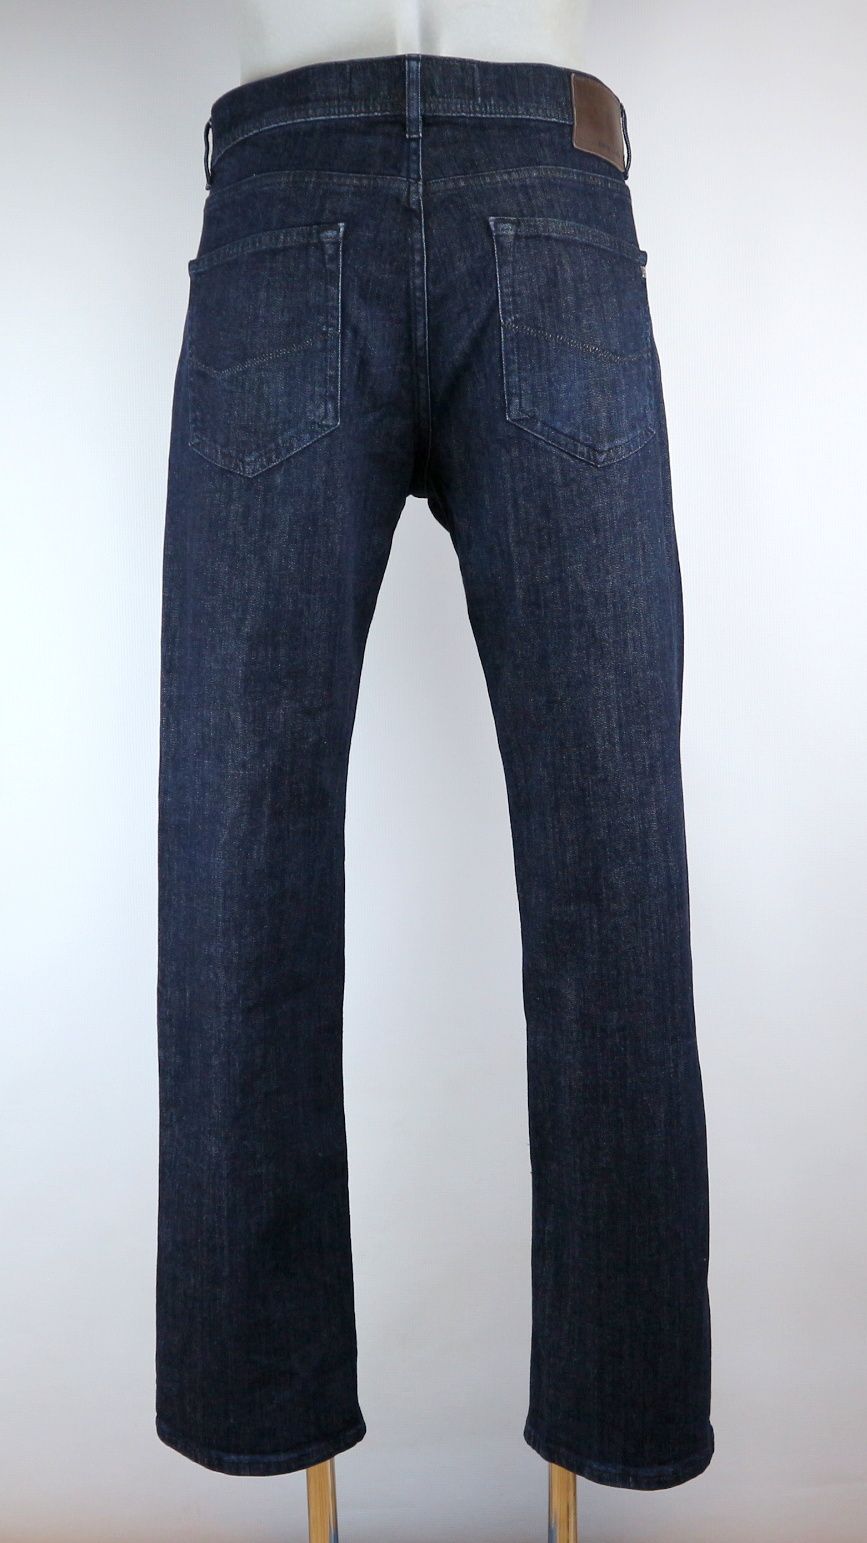 Pierre Cardin Pierre Cardin Lyon Fit jeans W38 L32 Size US 38 / EU 54 - 5 Thumbnail